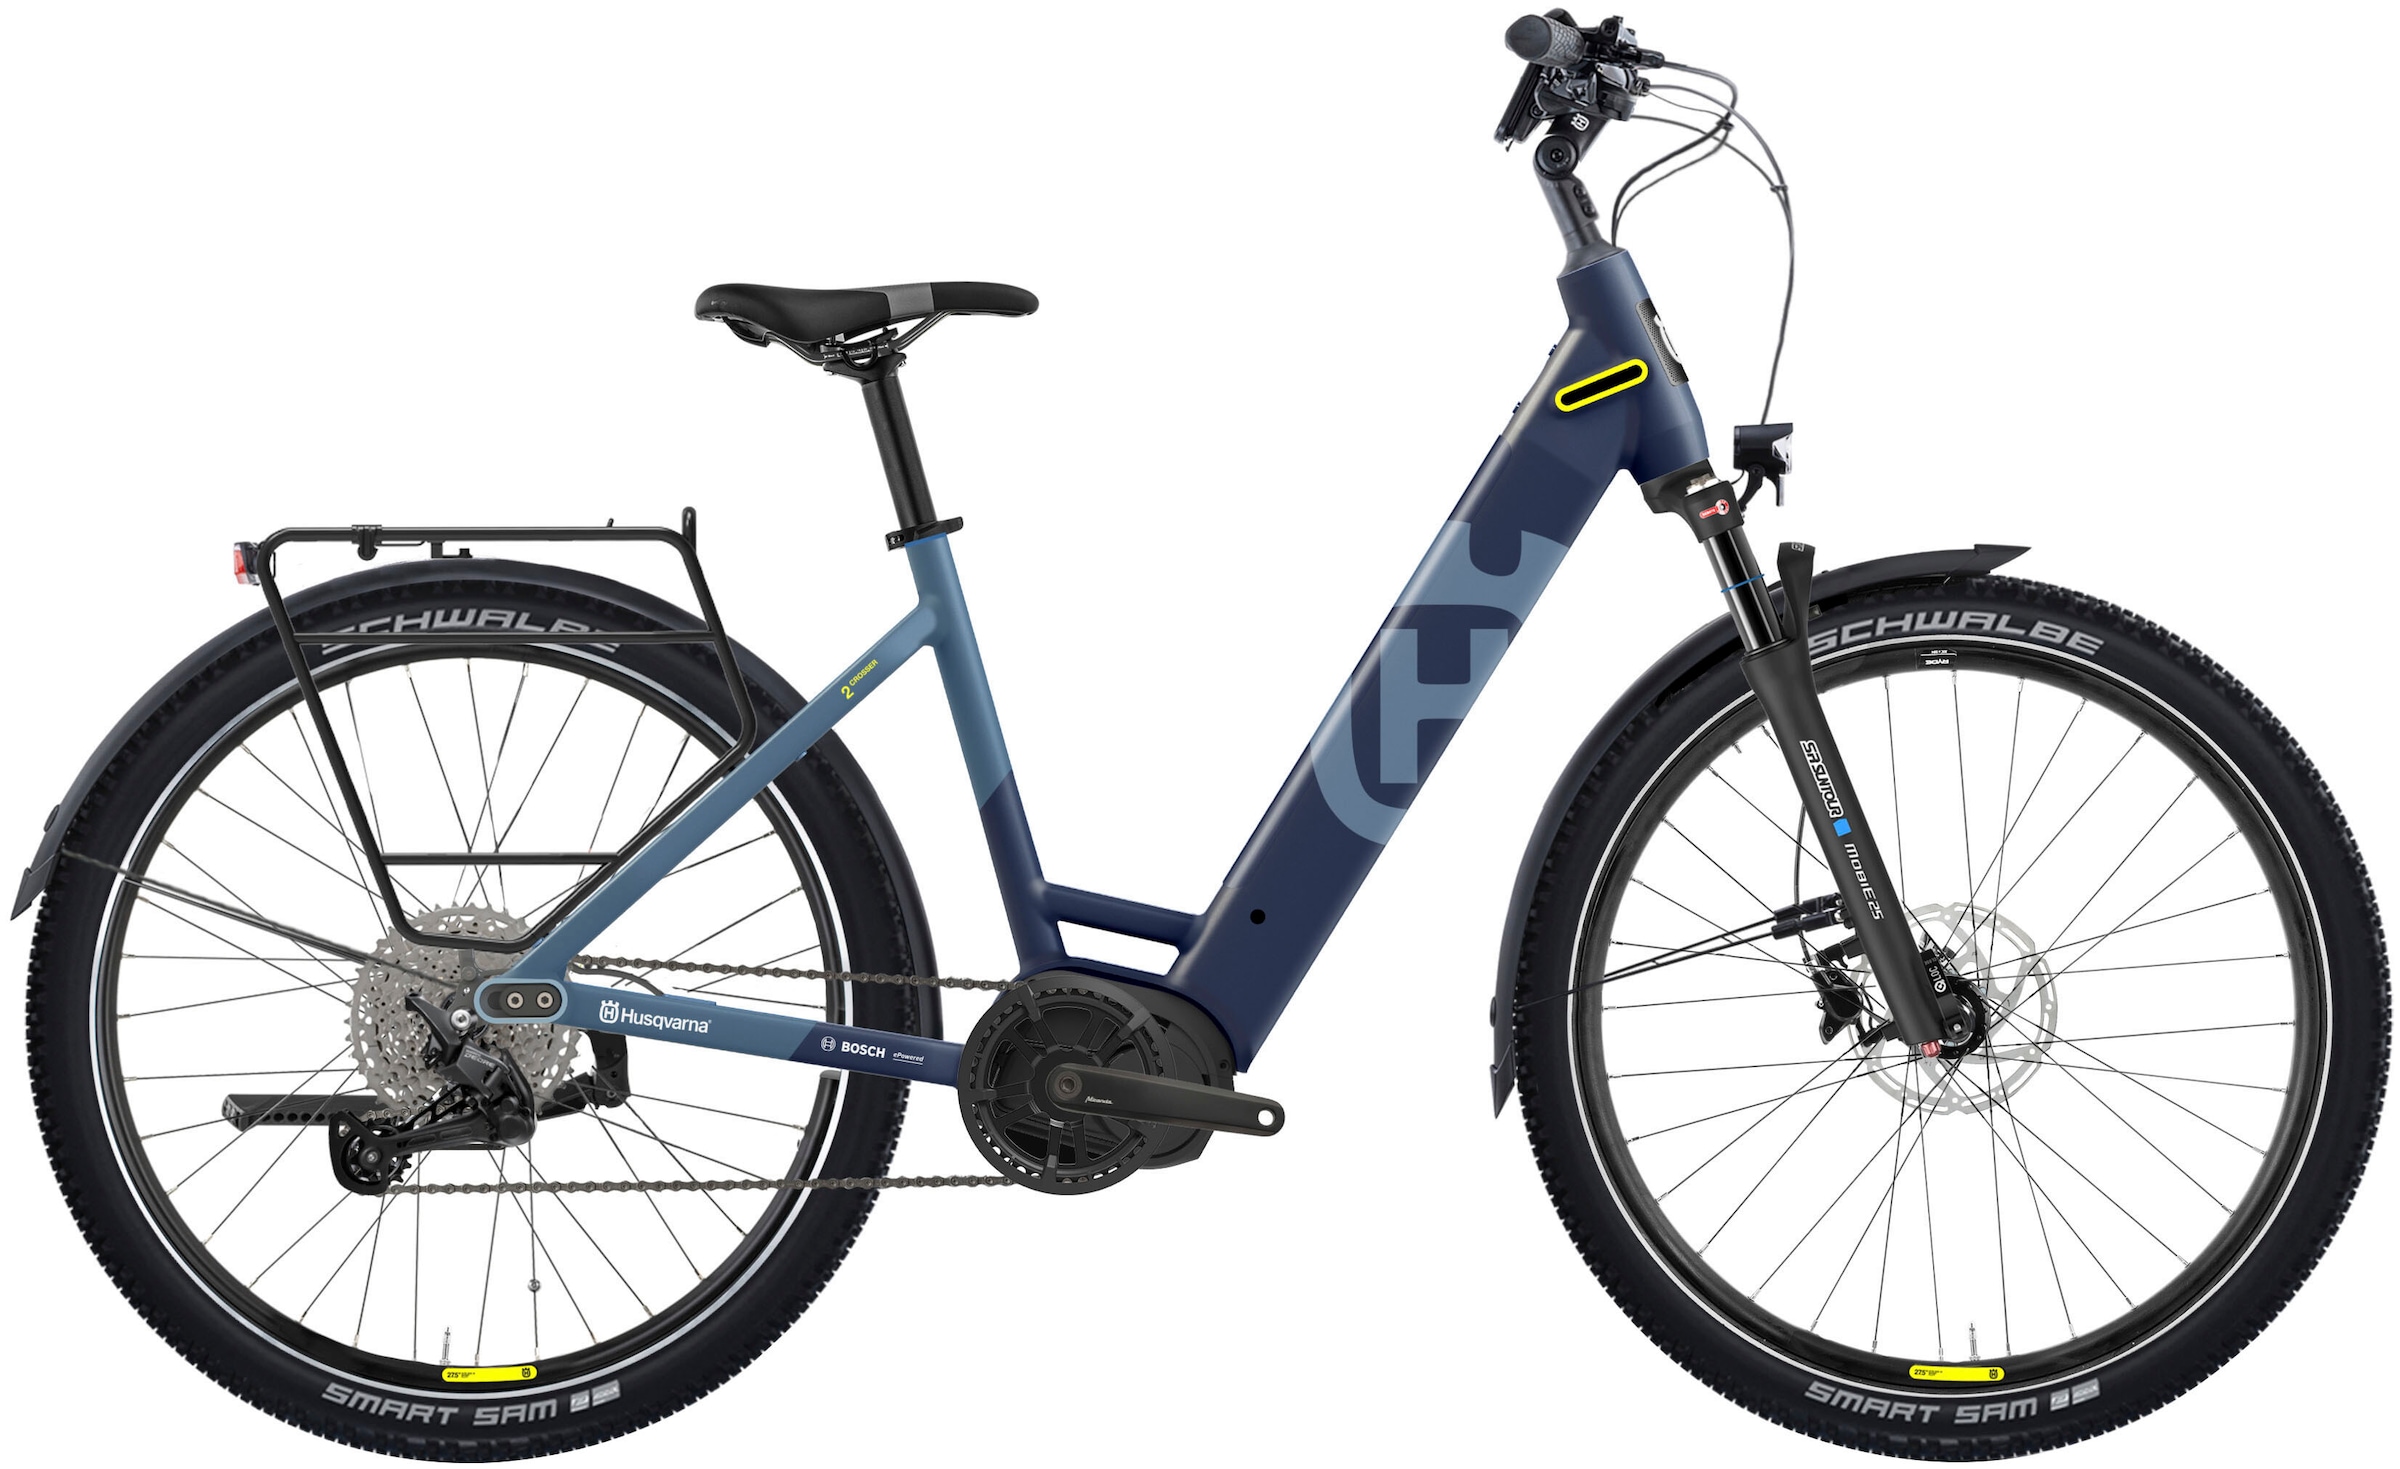 Husqvarna E-BICYCLES E-Bike »E-Trekkingbike Crosser 2«, 11 Gang, Shimano, Deore RD-M5100, Mittelmotor 250 W, Pedelec, Elektrofahrrad für Herren, Trekkingrad, Bluetooth